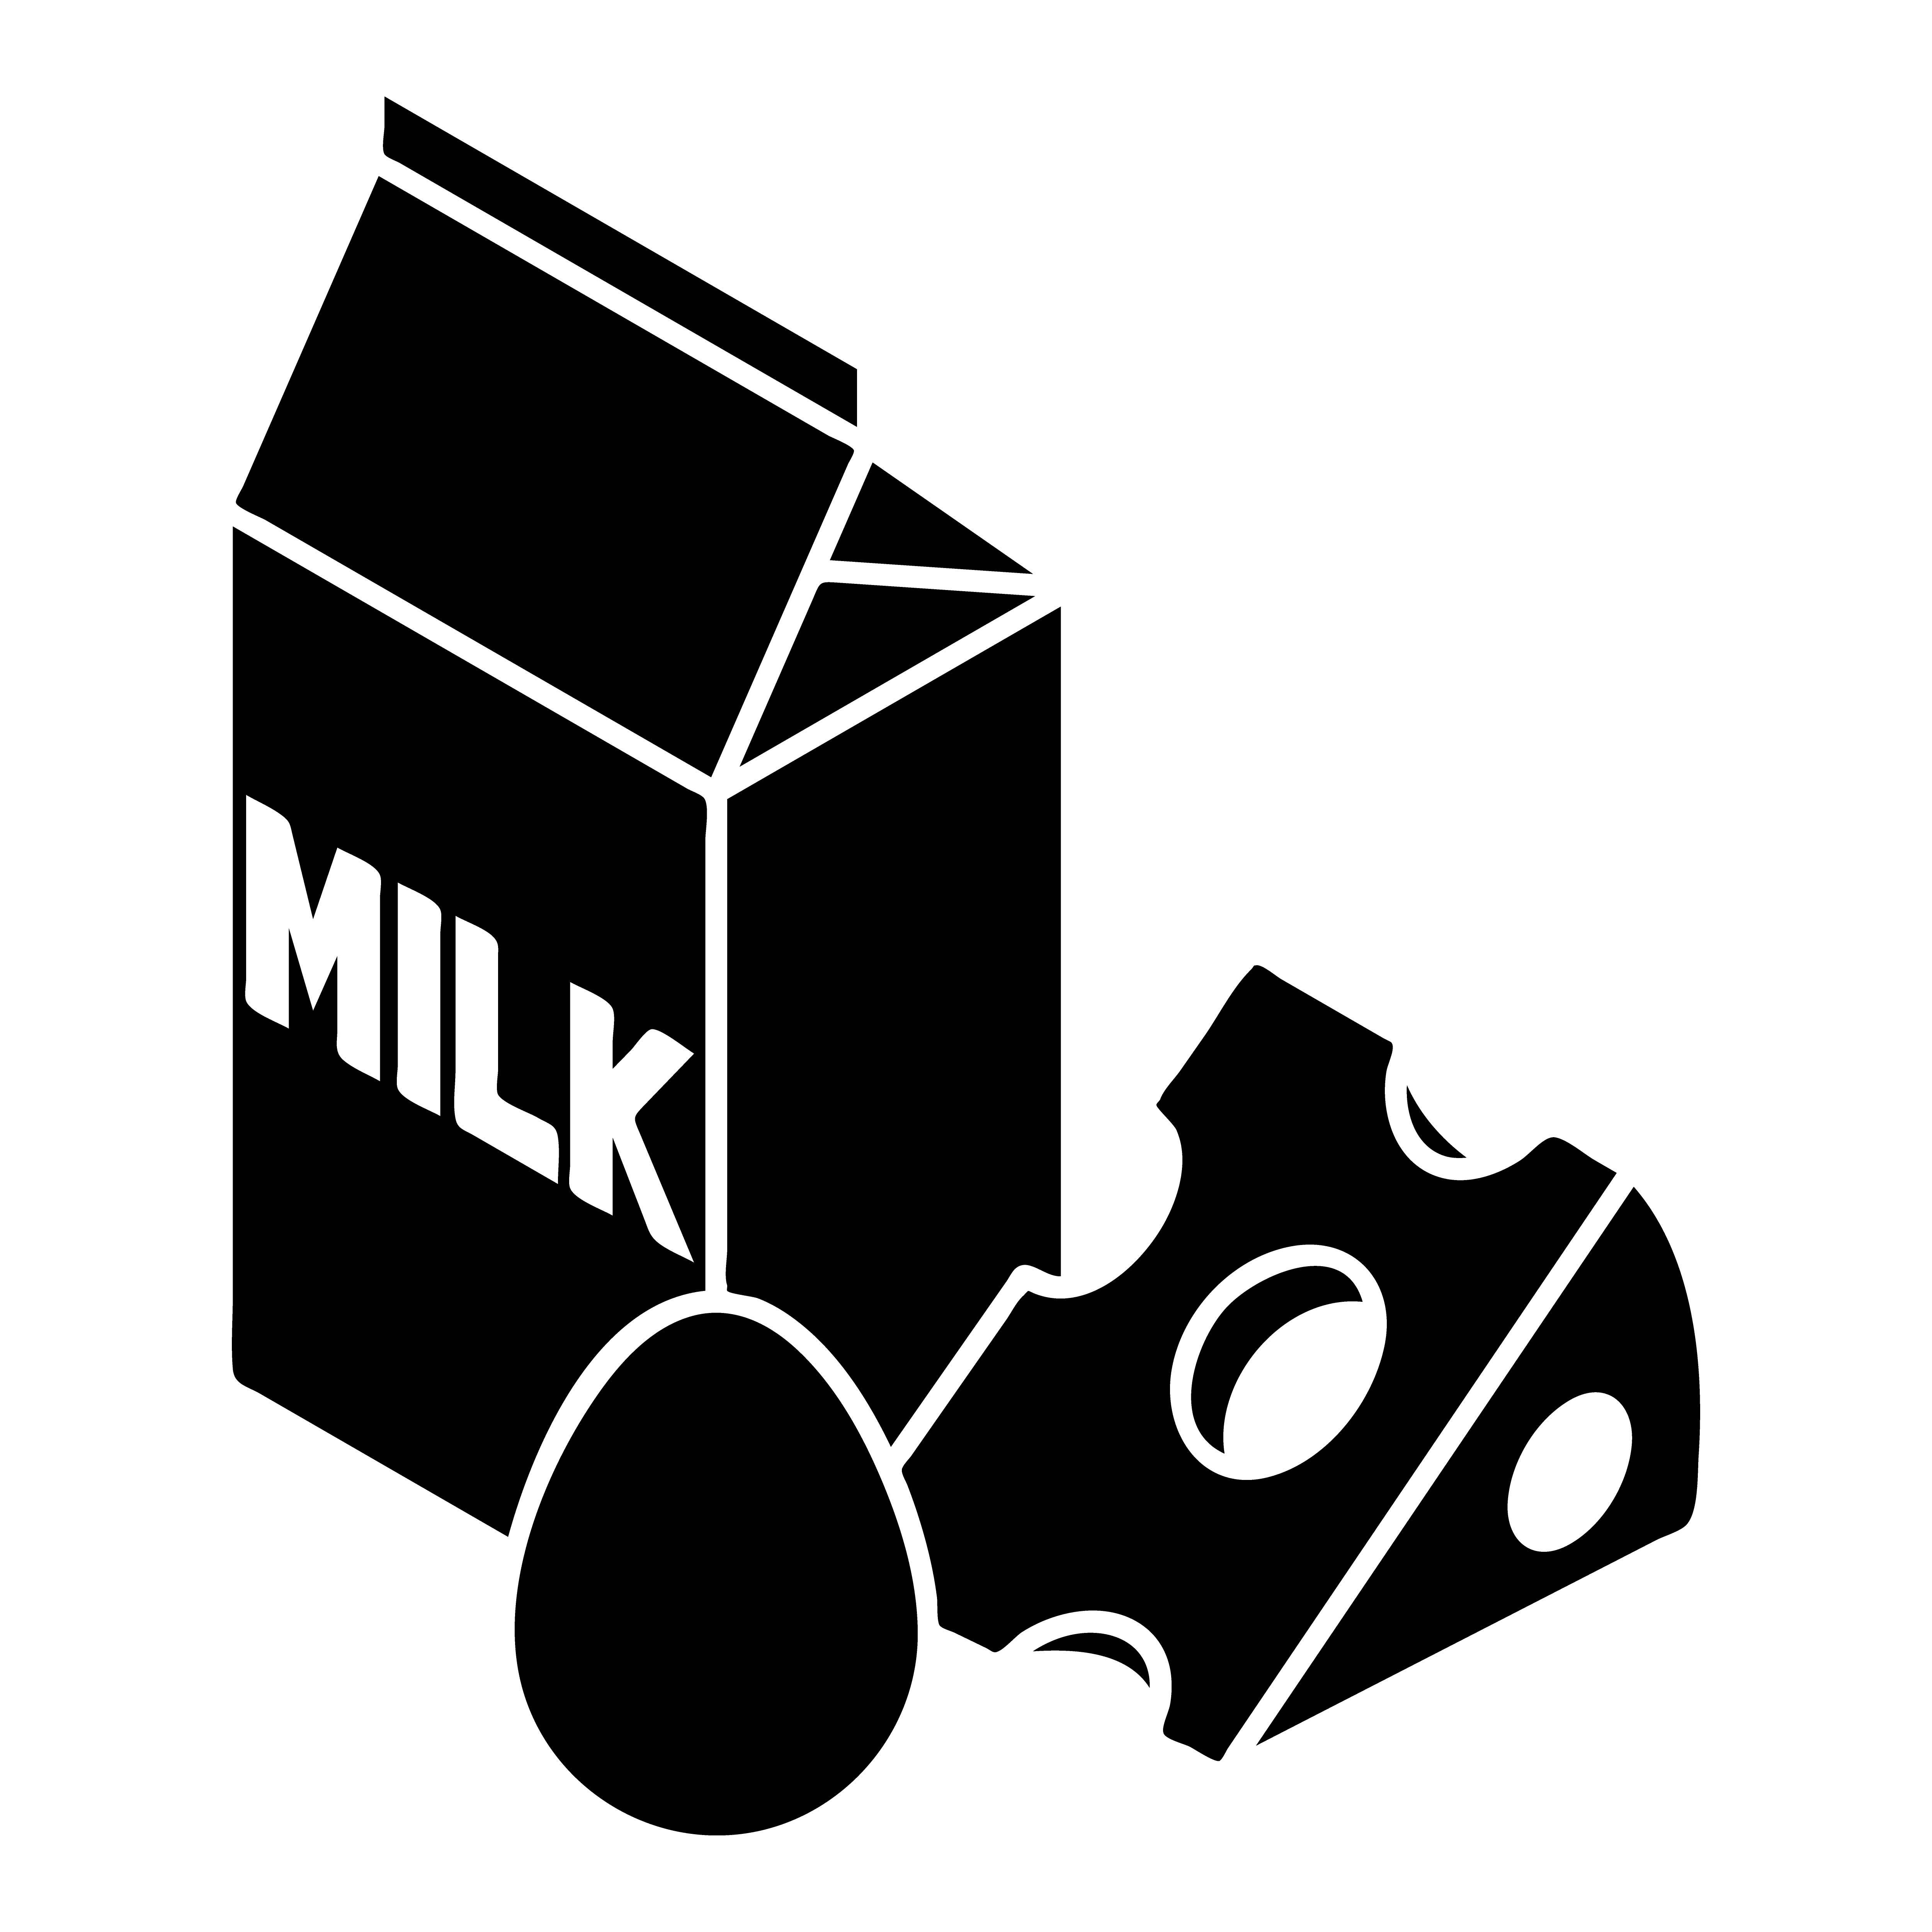 Milk & Milk Products